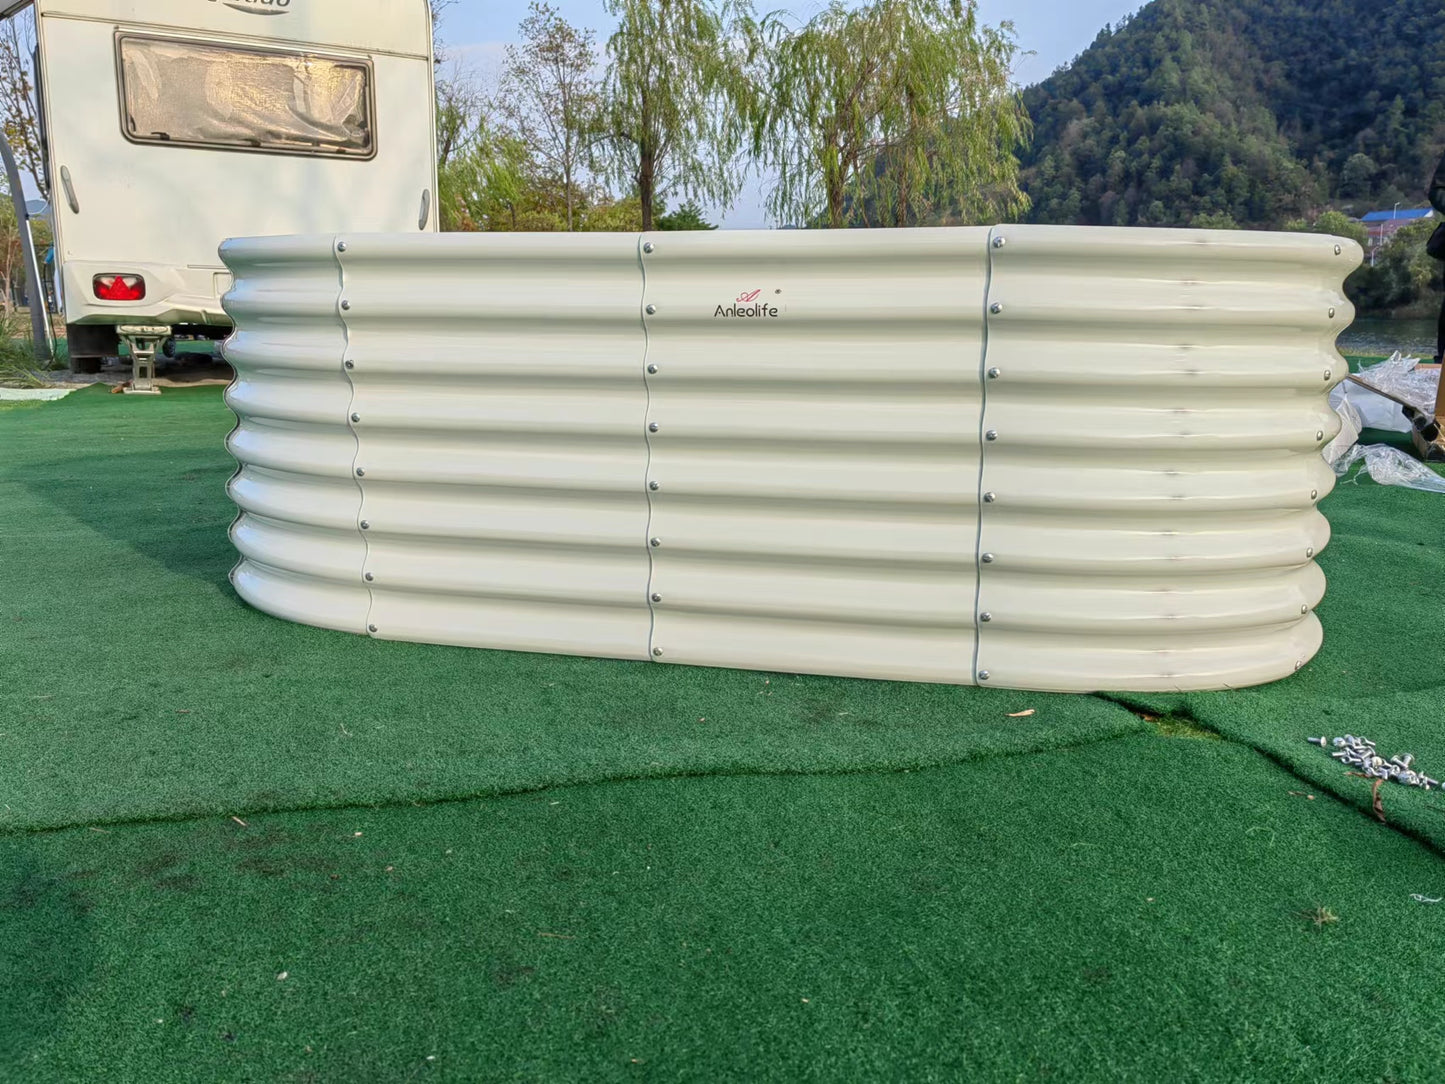 Set of 6: 8x4x2ft Oval Modular Metal Raised Garden Beds (White)